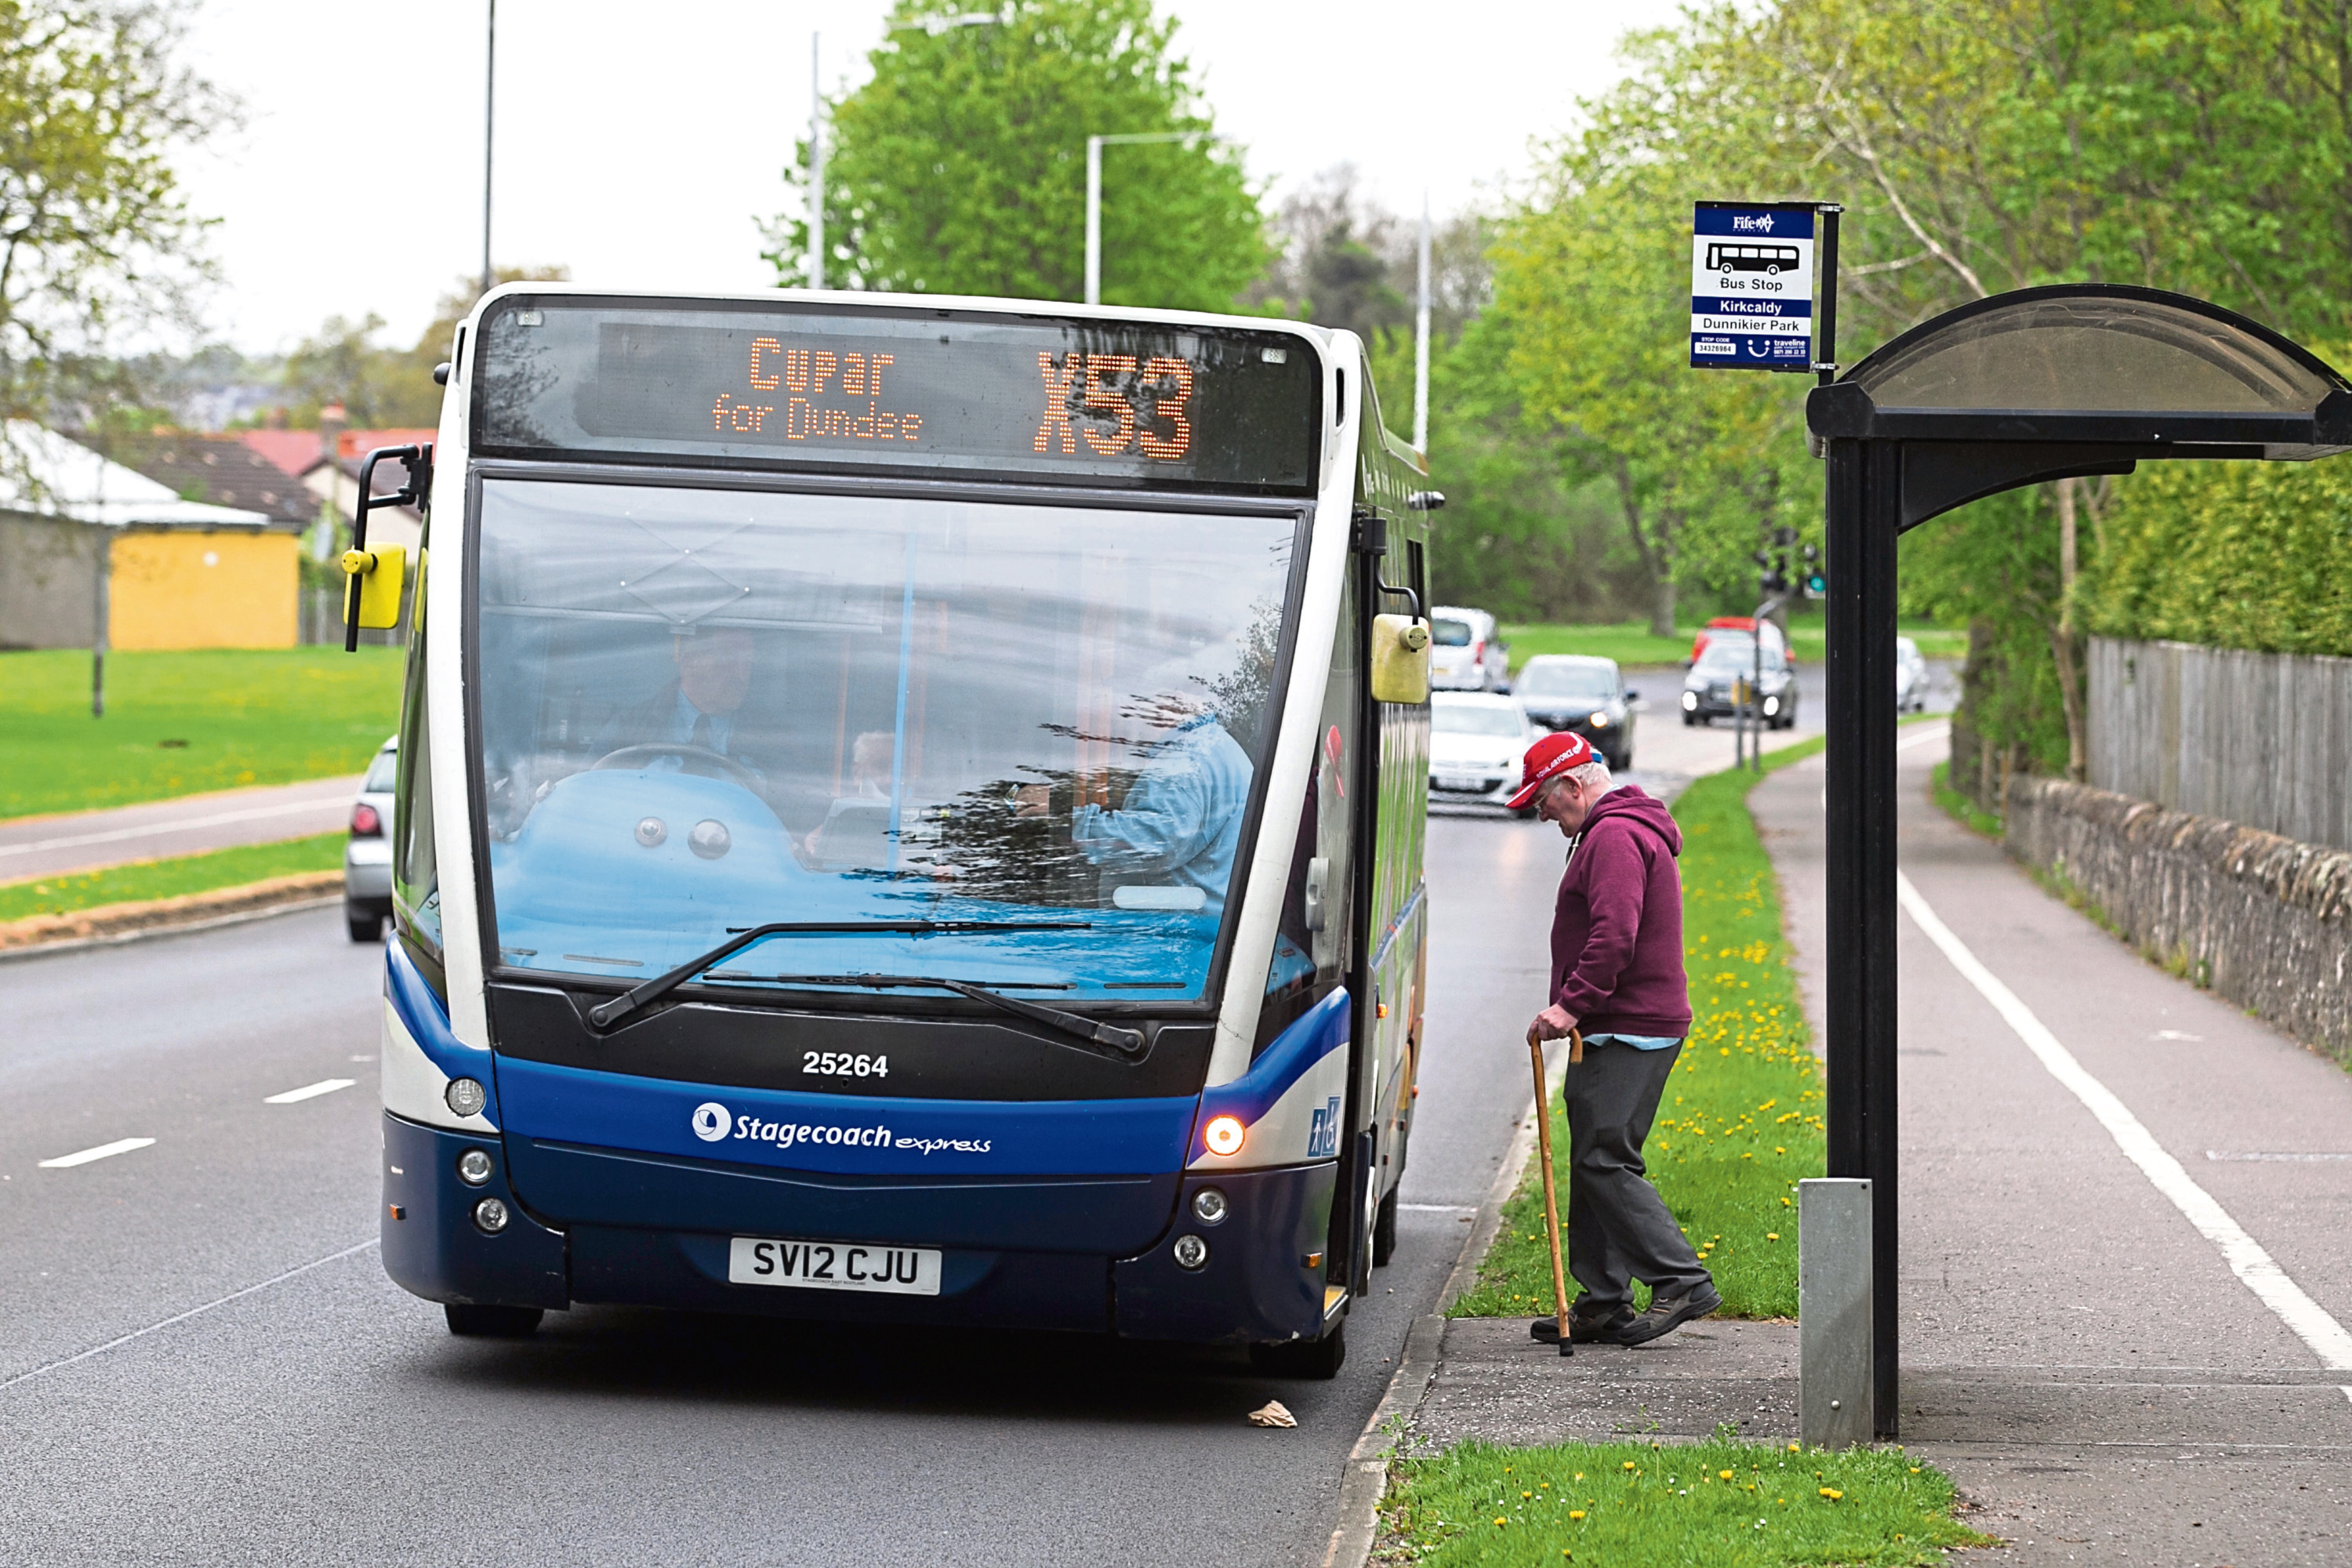 The X53 bus service in Kirkcaldy (Chris Austin / DC Thomson)